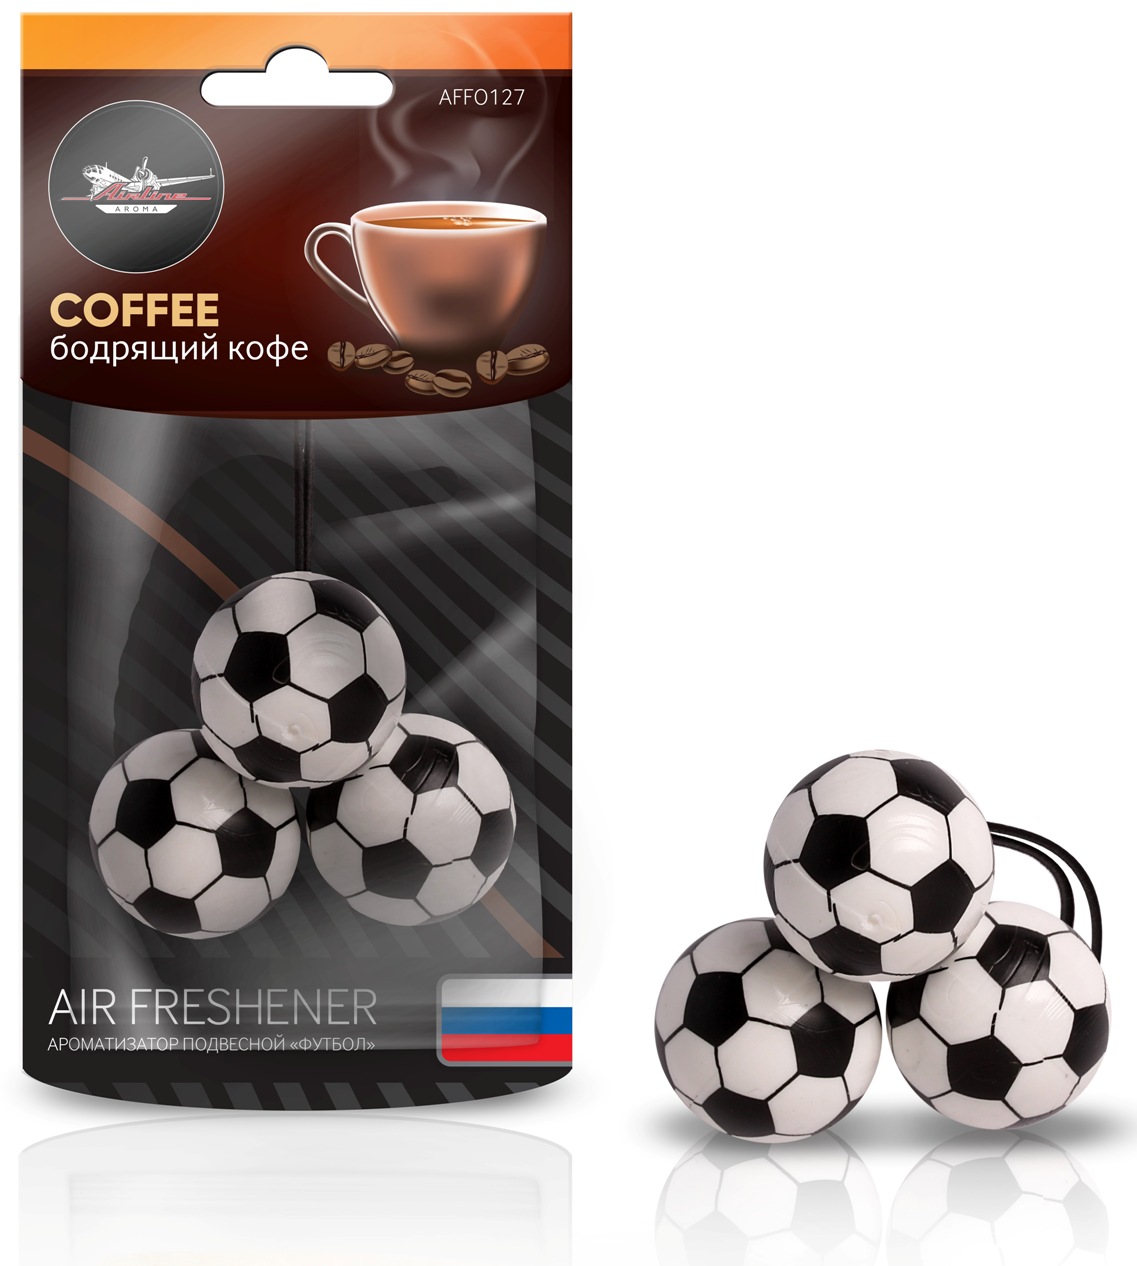 "Футбол" Бодрящий кофе